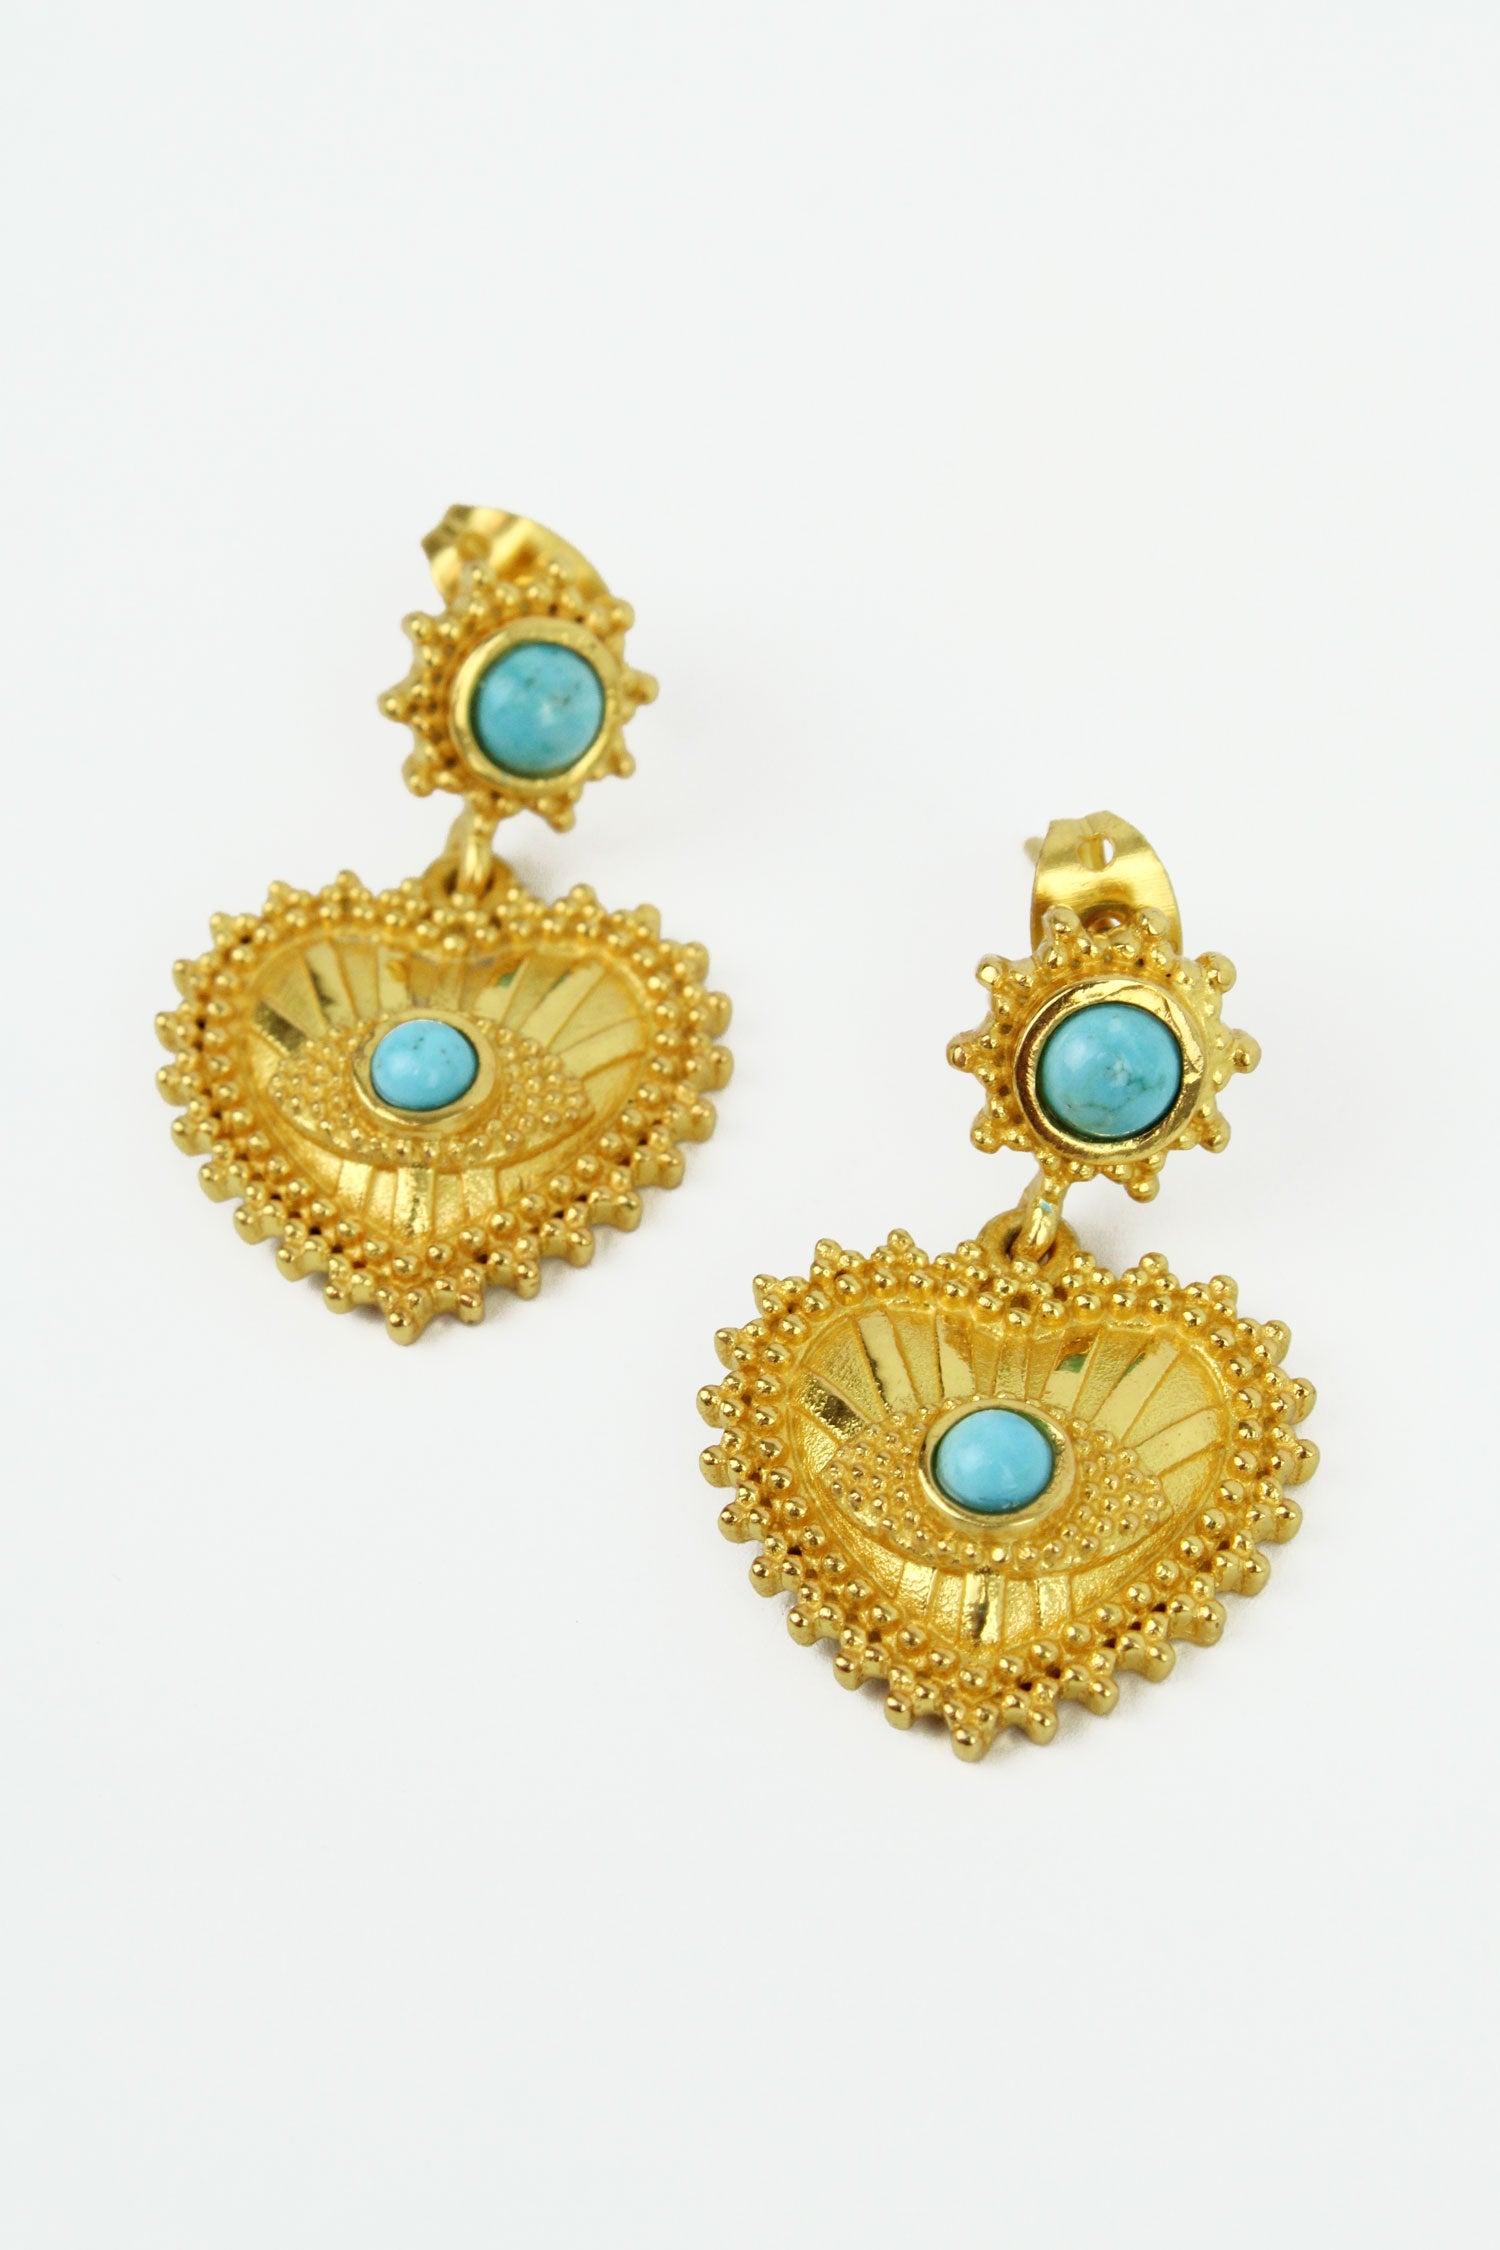 My Doris - Gold & Turquoise Heart Earrings